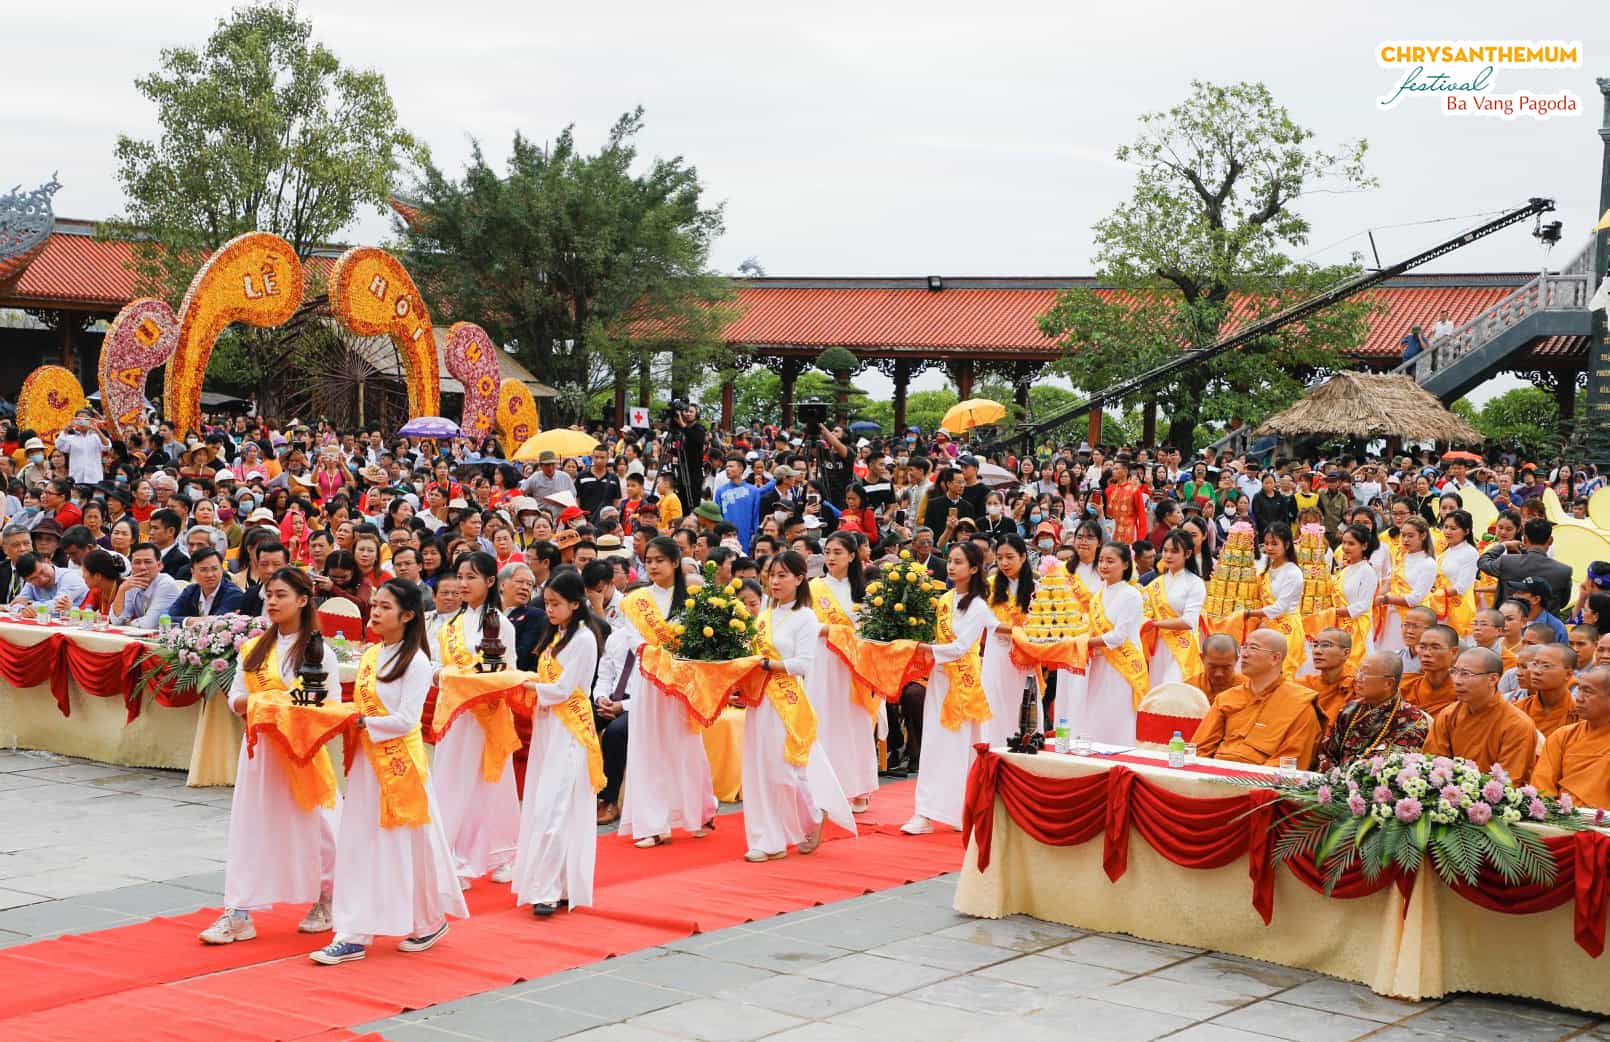 Rites of presenting flowers and offerings at Chrysanthemum Festival 2020 at Ba Vang Pagoda